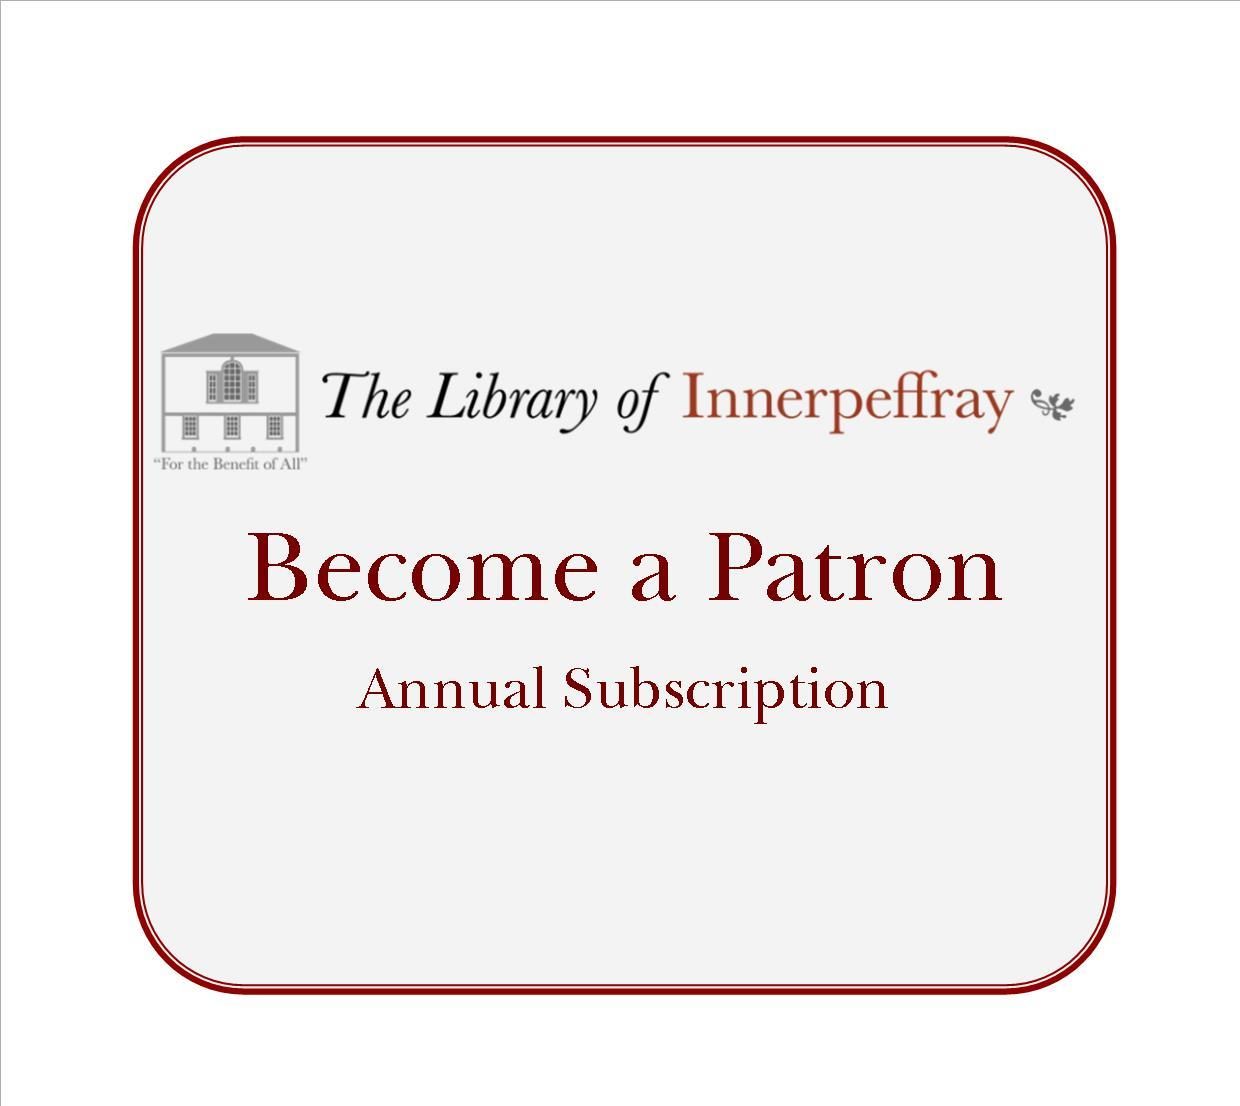 Annual patron subscription